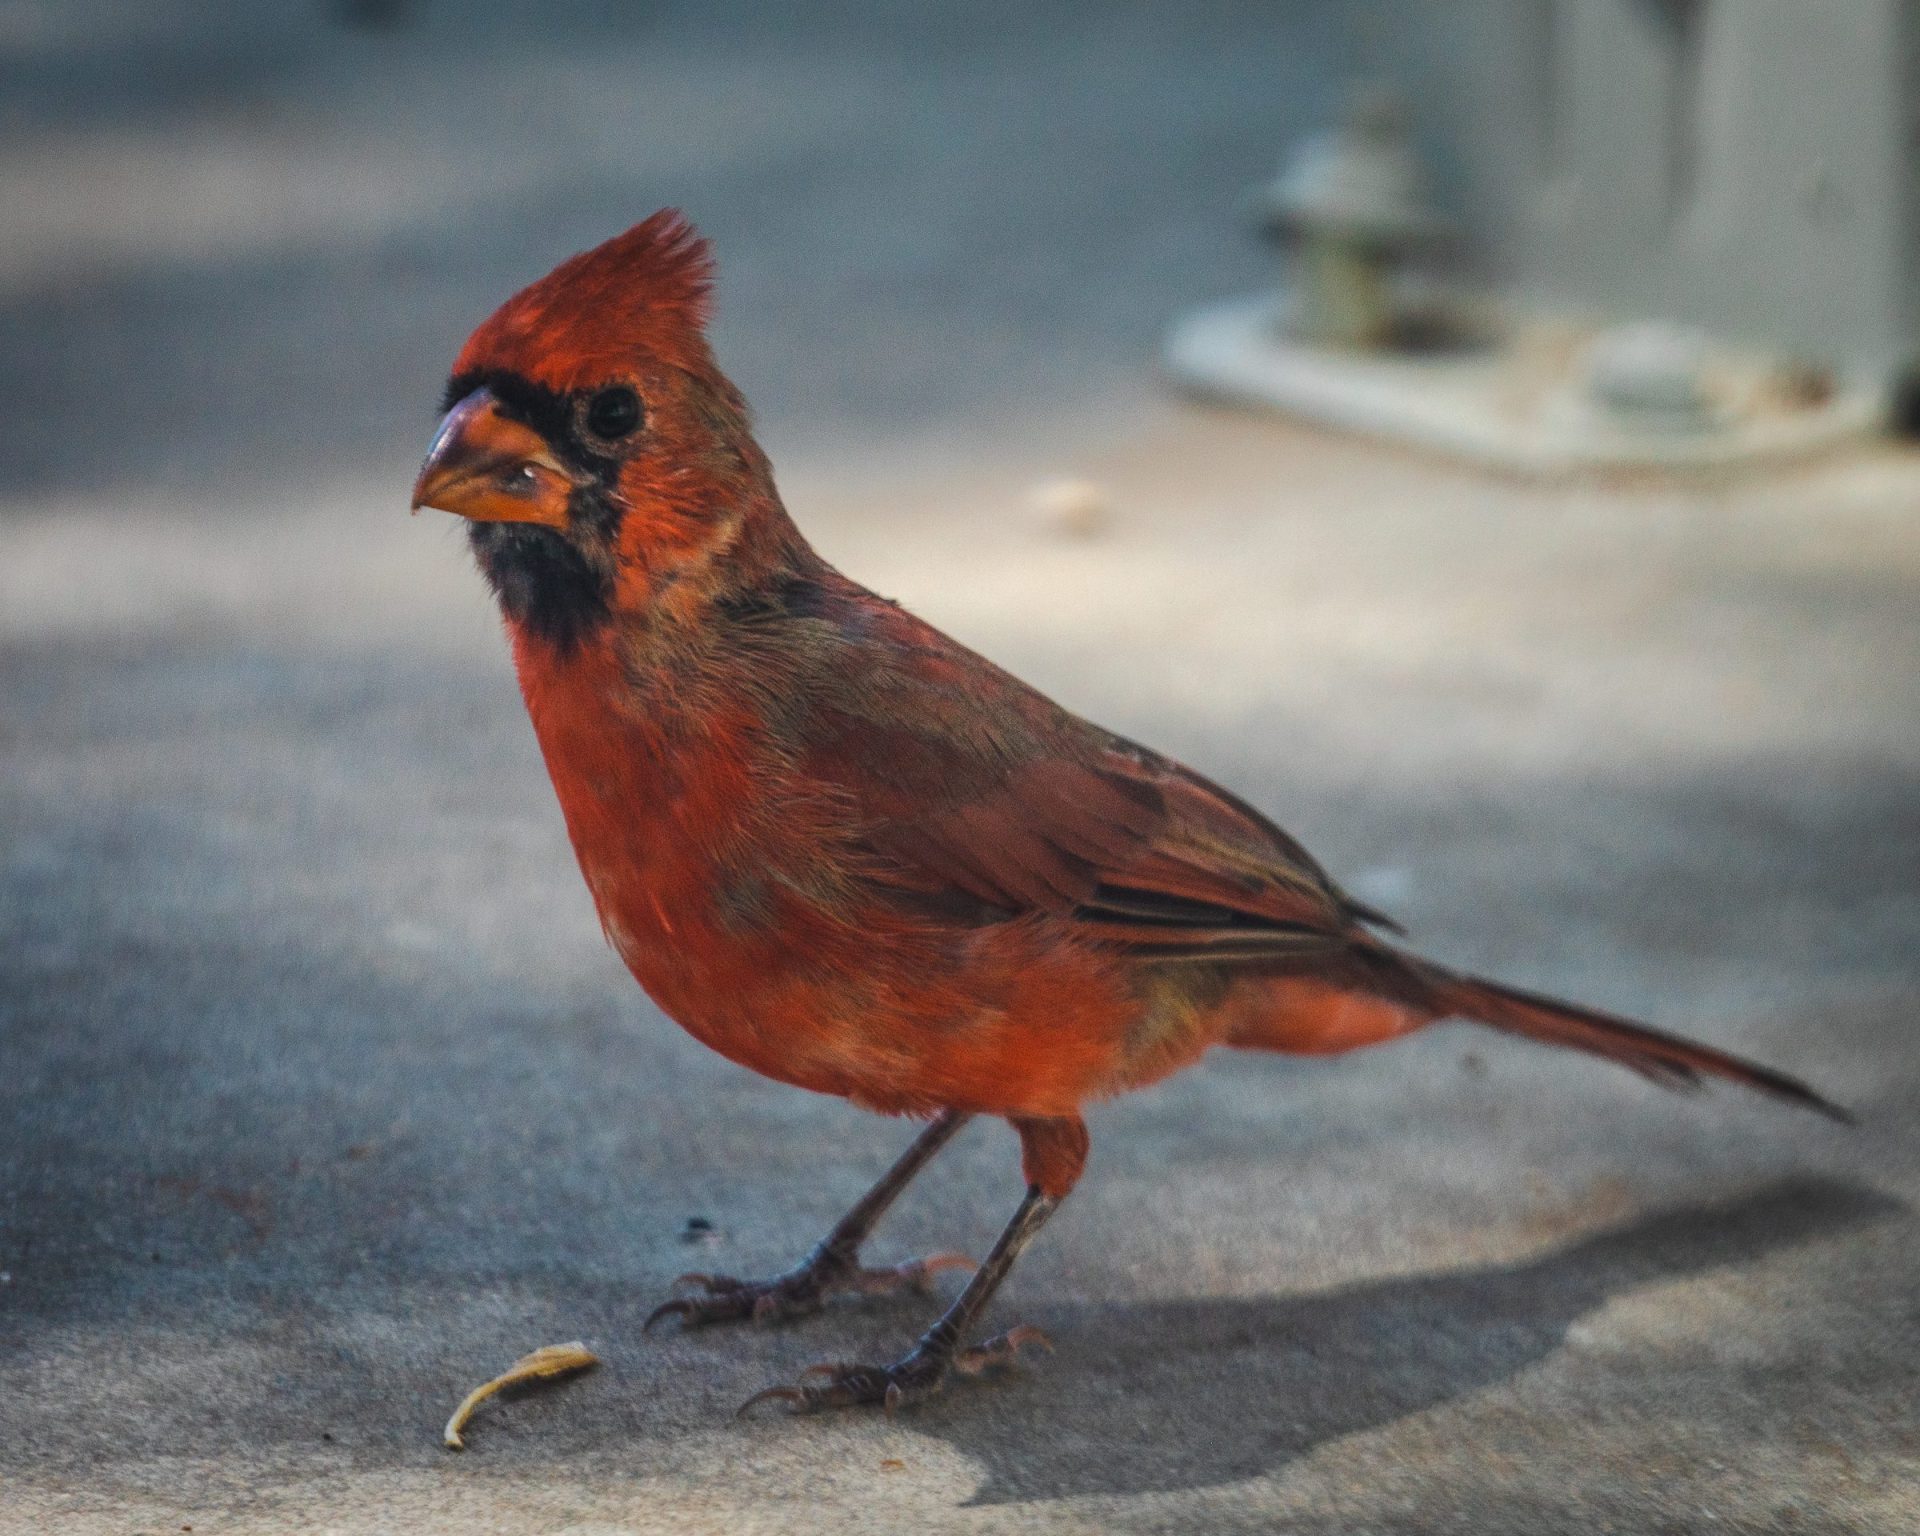 Cardinal sitting on the ground